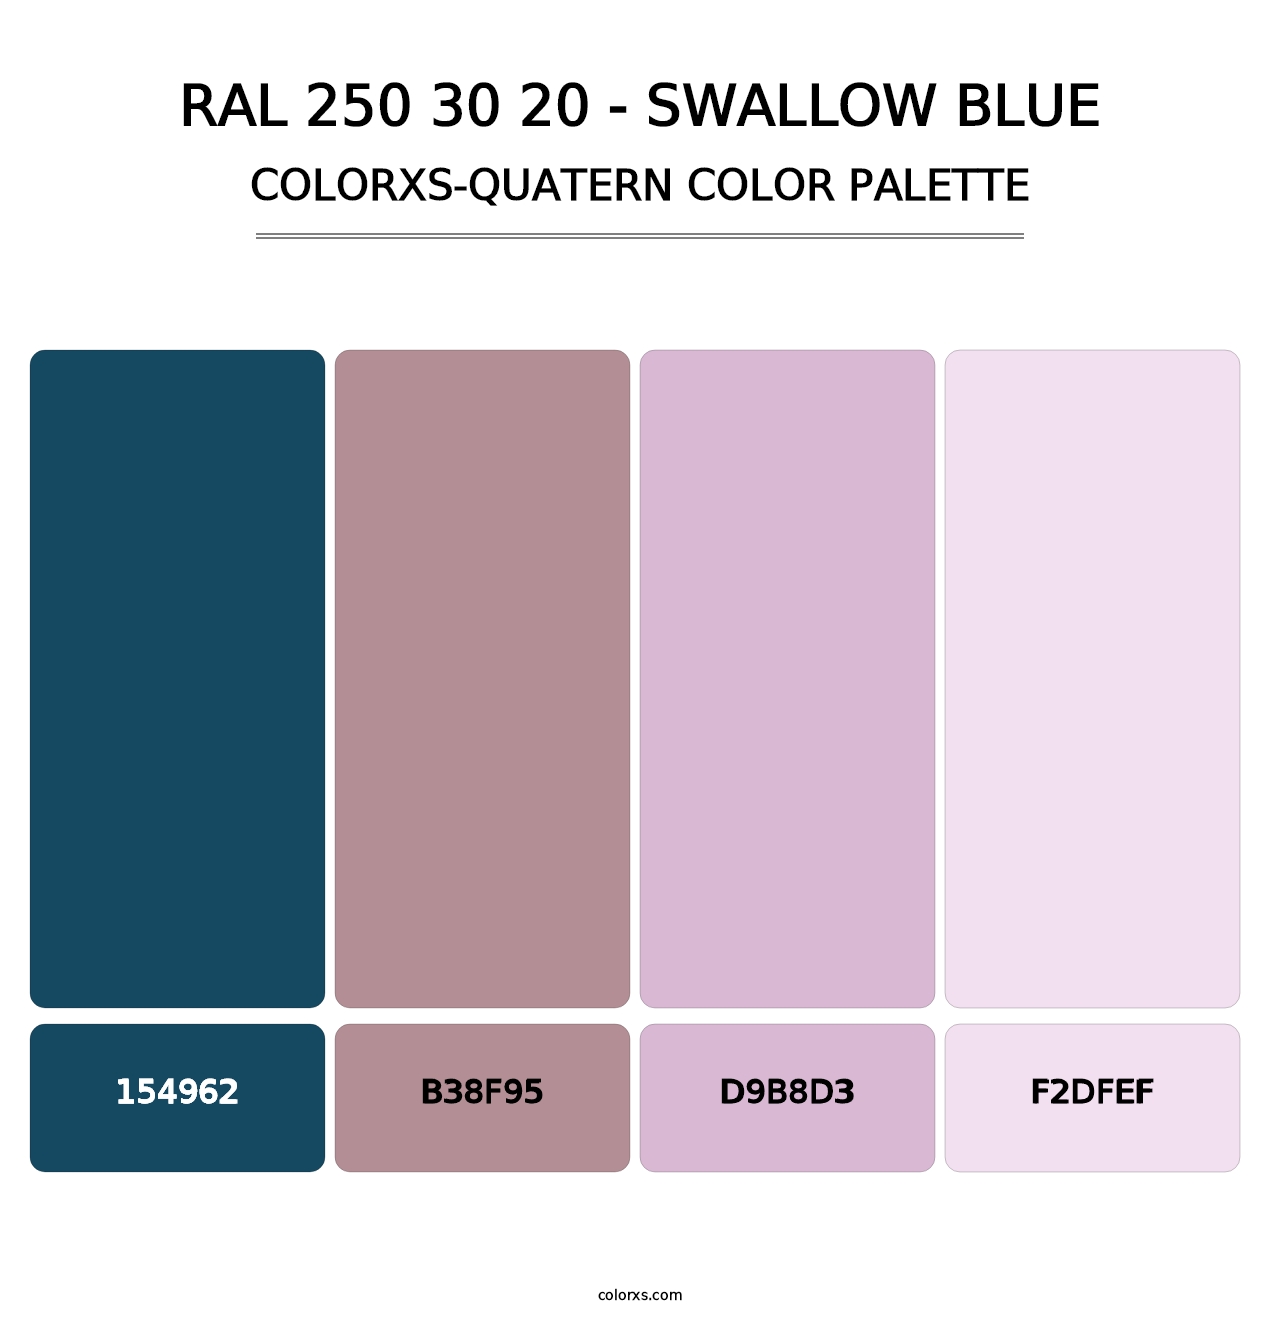 RAL 250 30 20 - Swallow Blue - Colorxs Quatern Palette